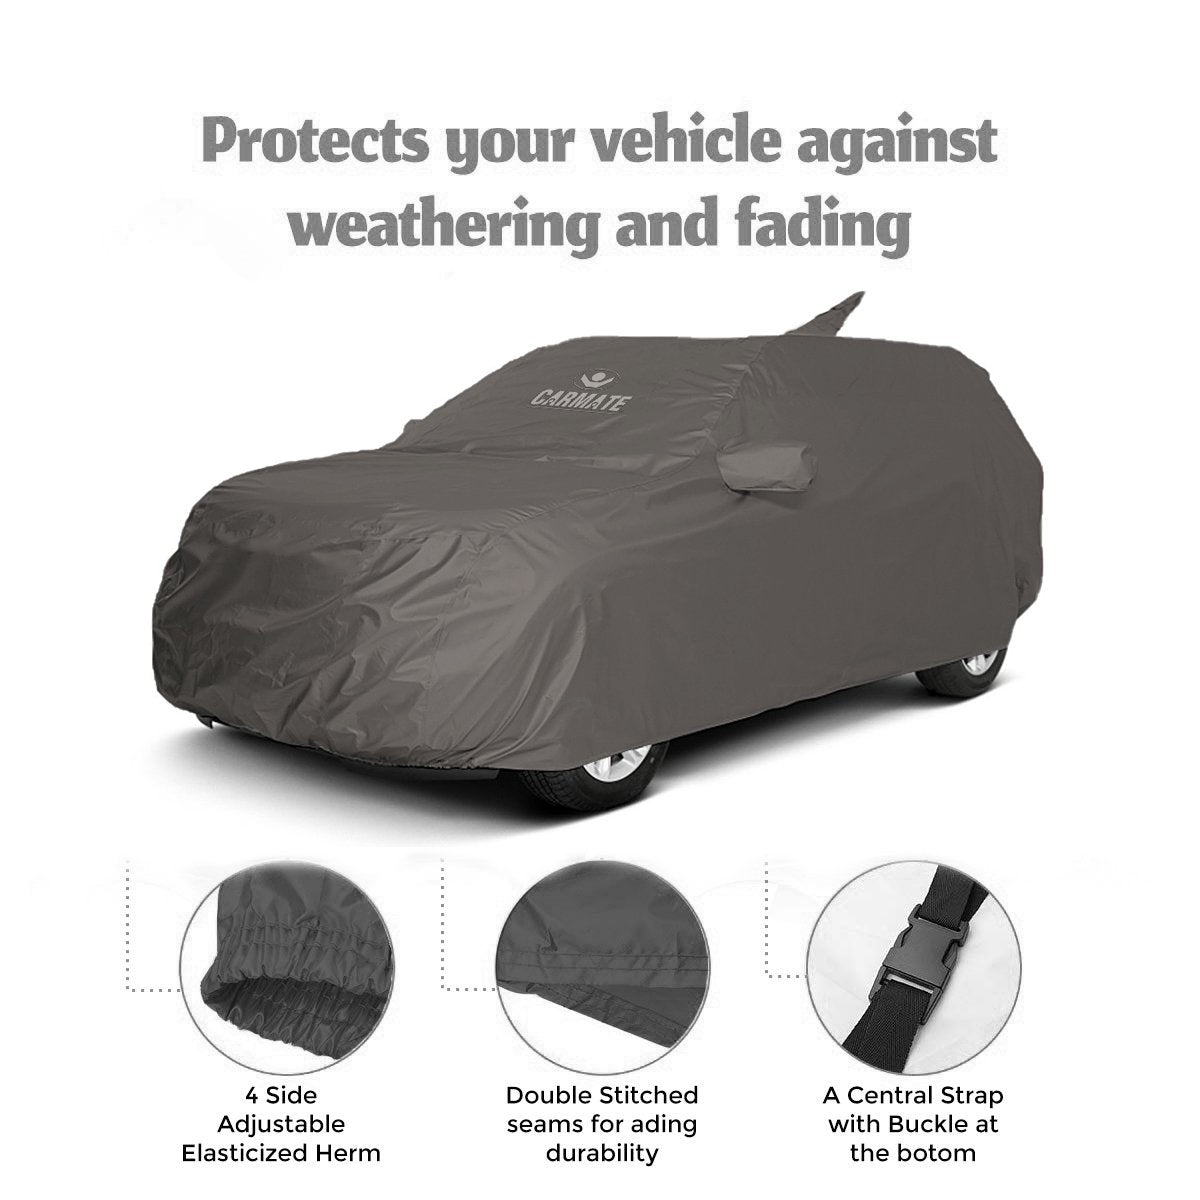 Carmate Car Body Cover 100% Waterproof Pride (Grey) for BMW - X1 - CARMATE®